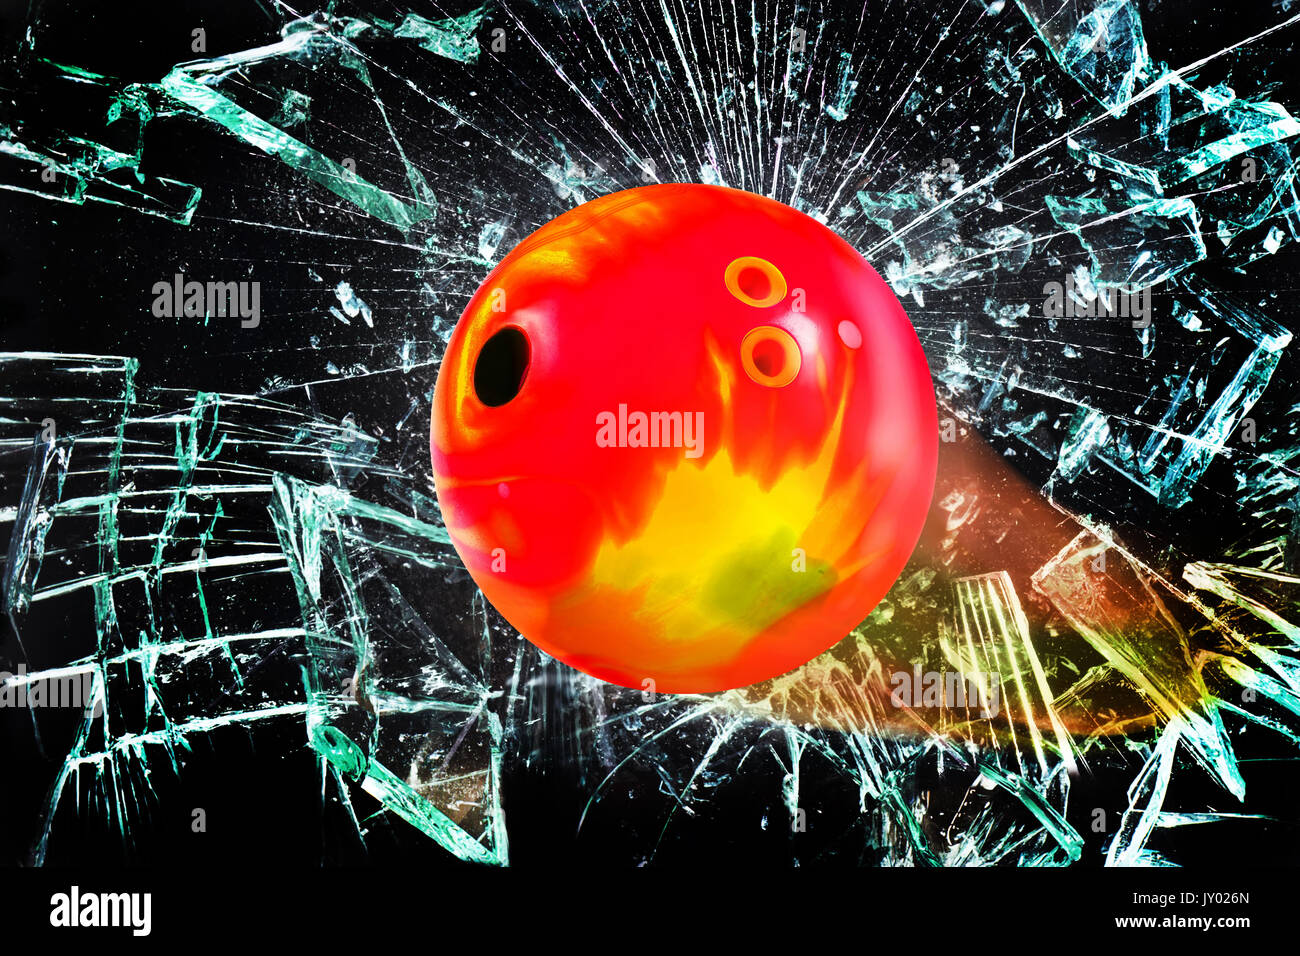 Bowling ball going through broken glass window. Stock Photo